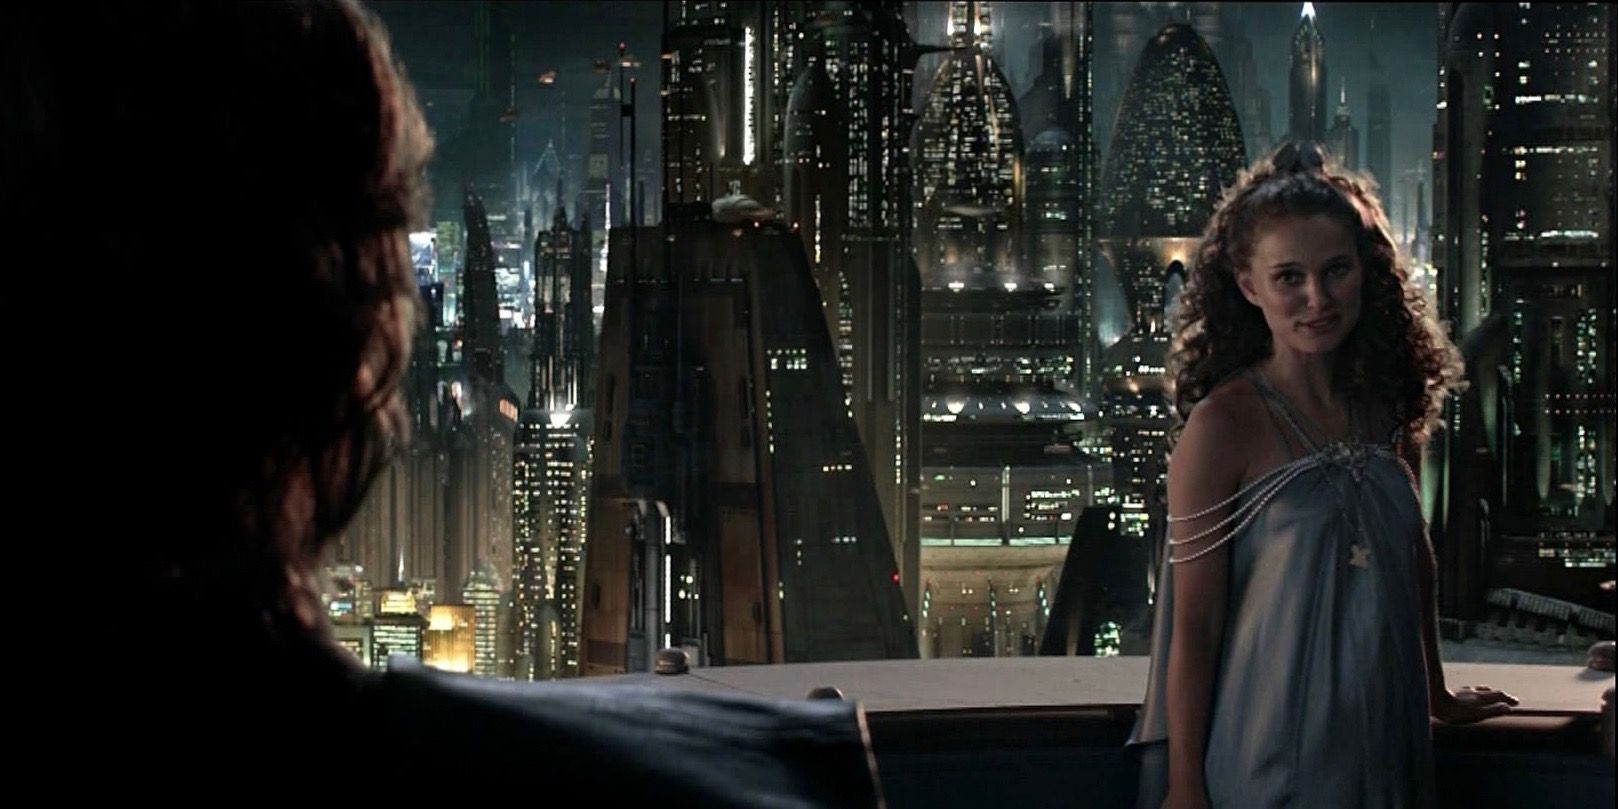 Natalie Portman as Padme in Star Wars Revenge of the Sith